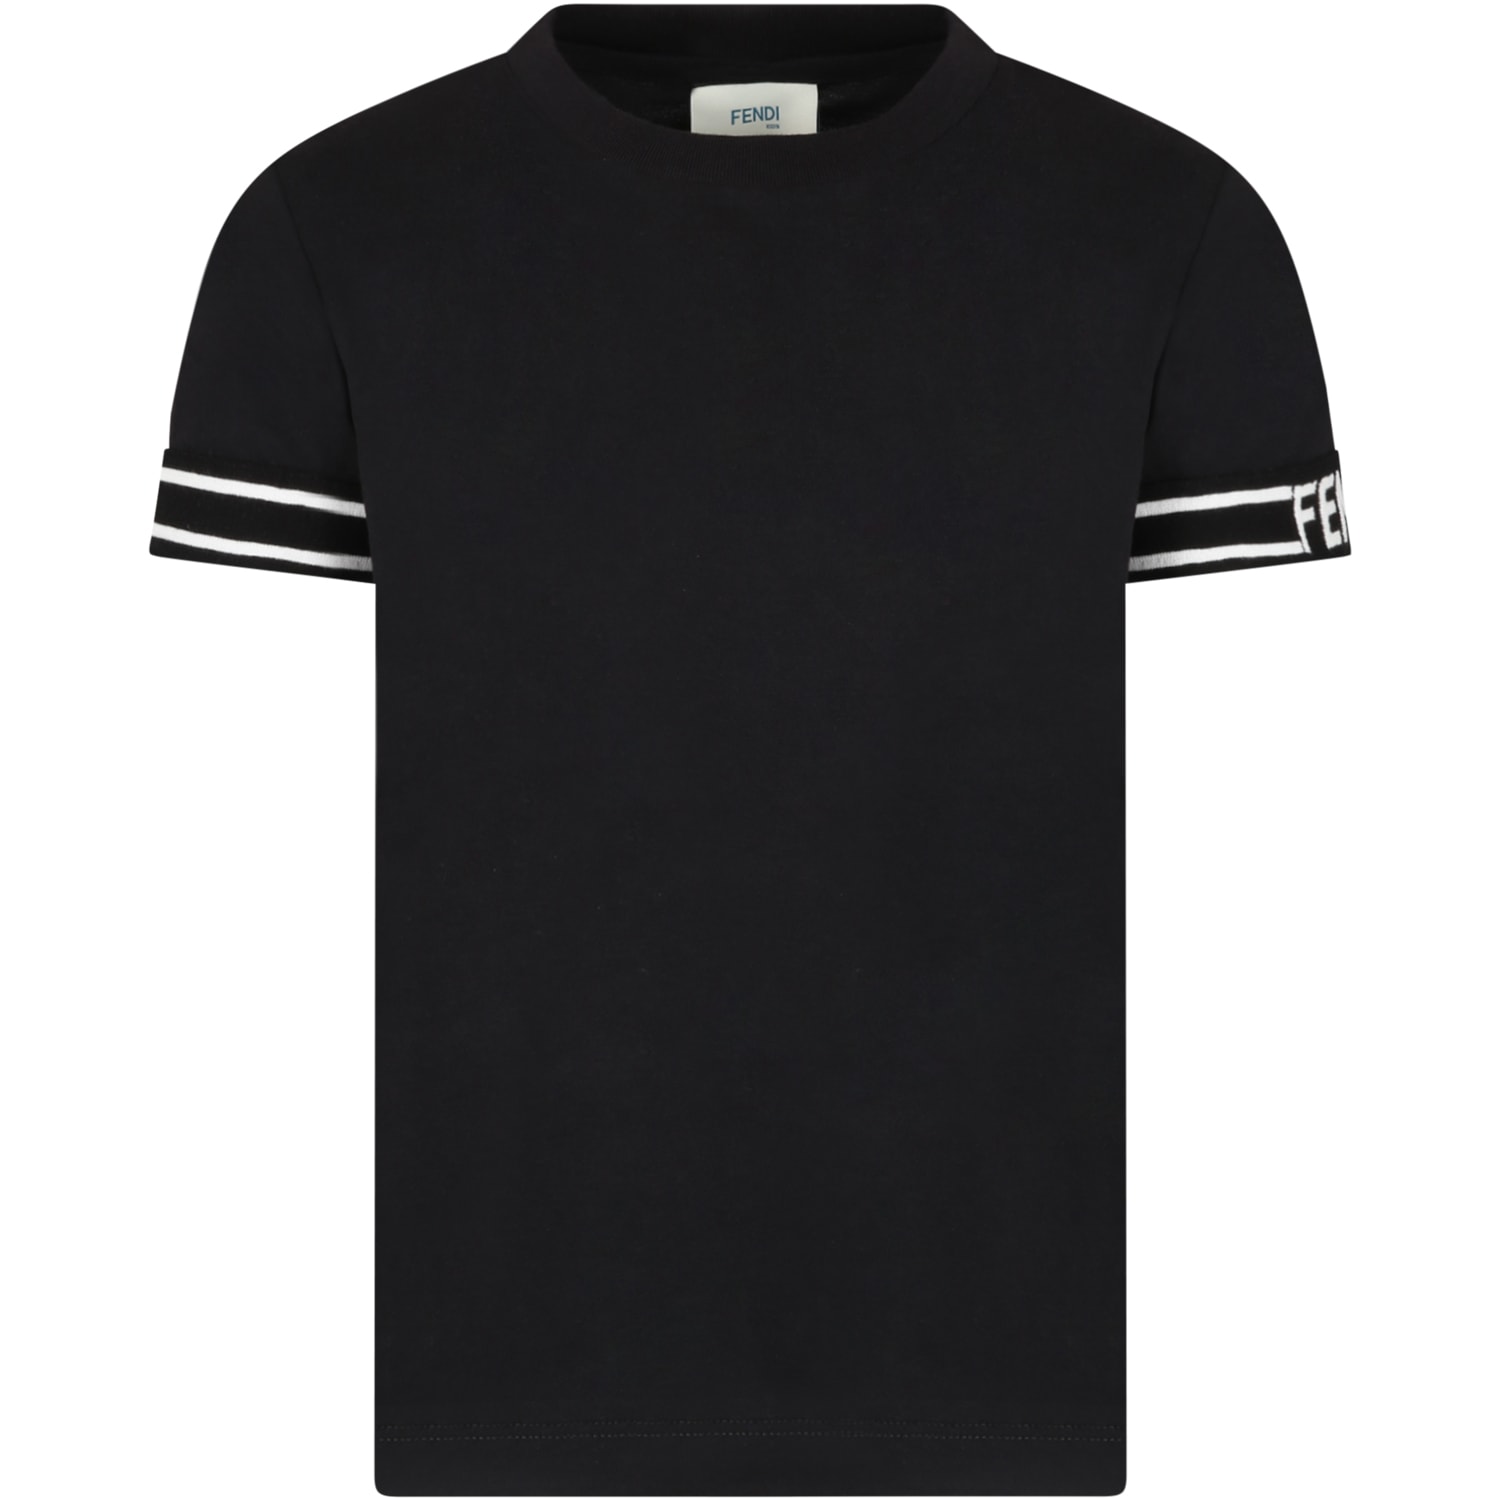 Fendi Black T-shirt For Kids With White Logo